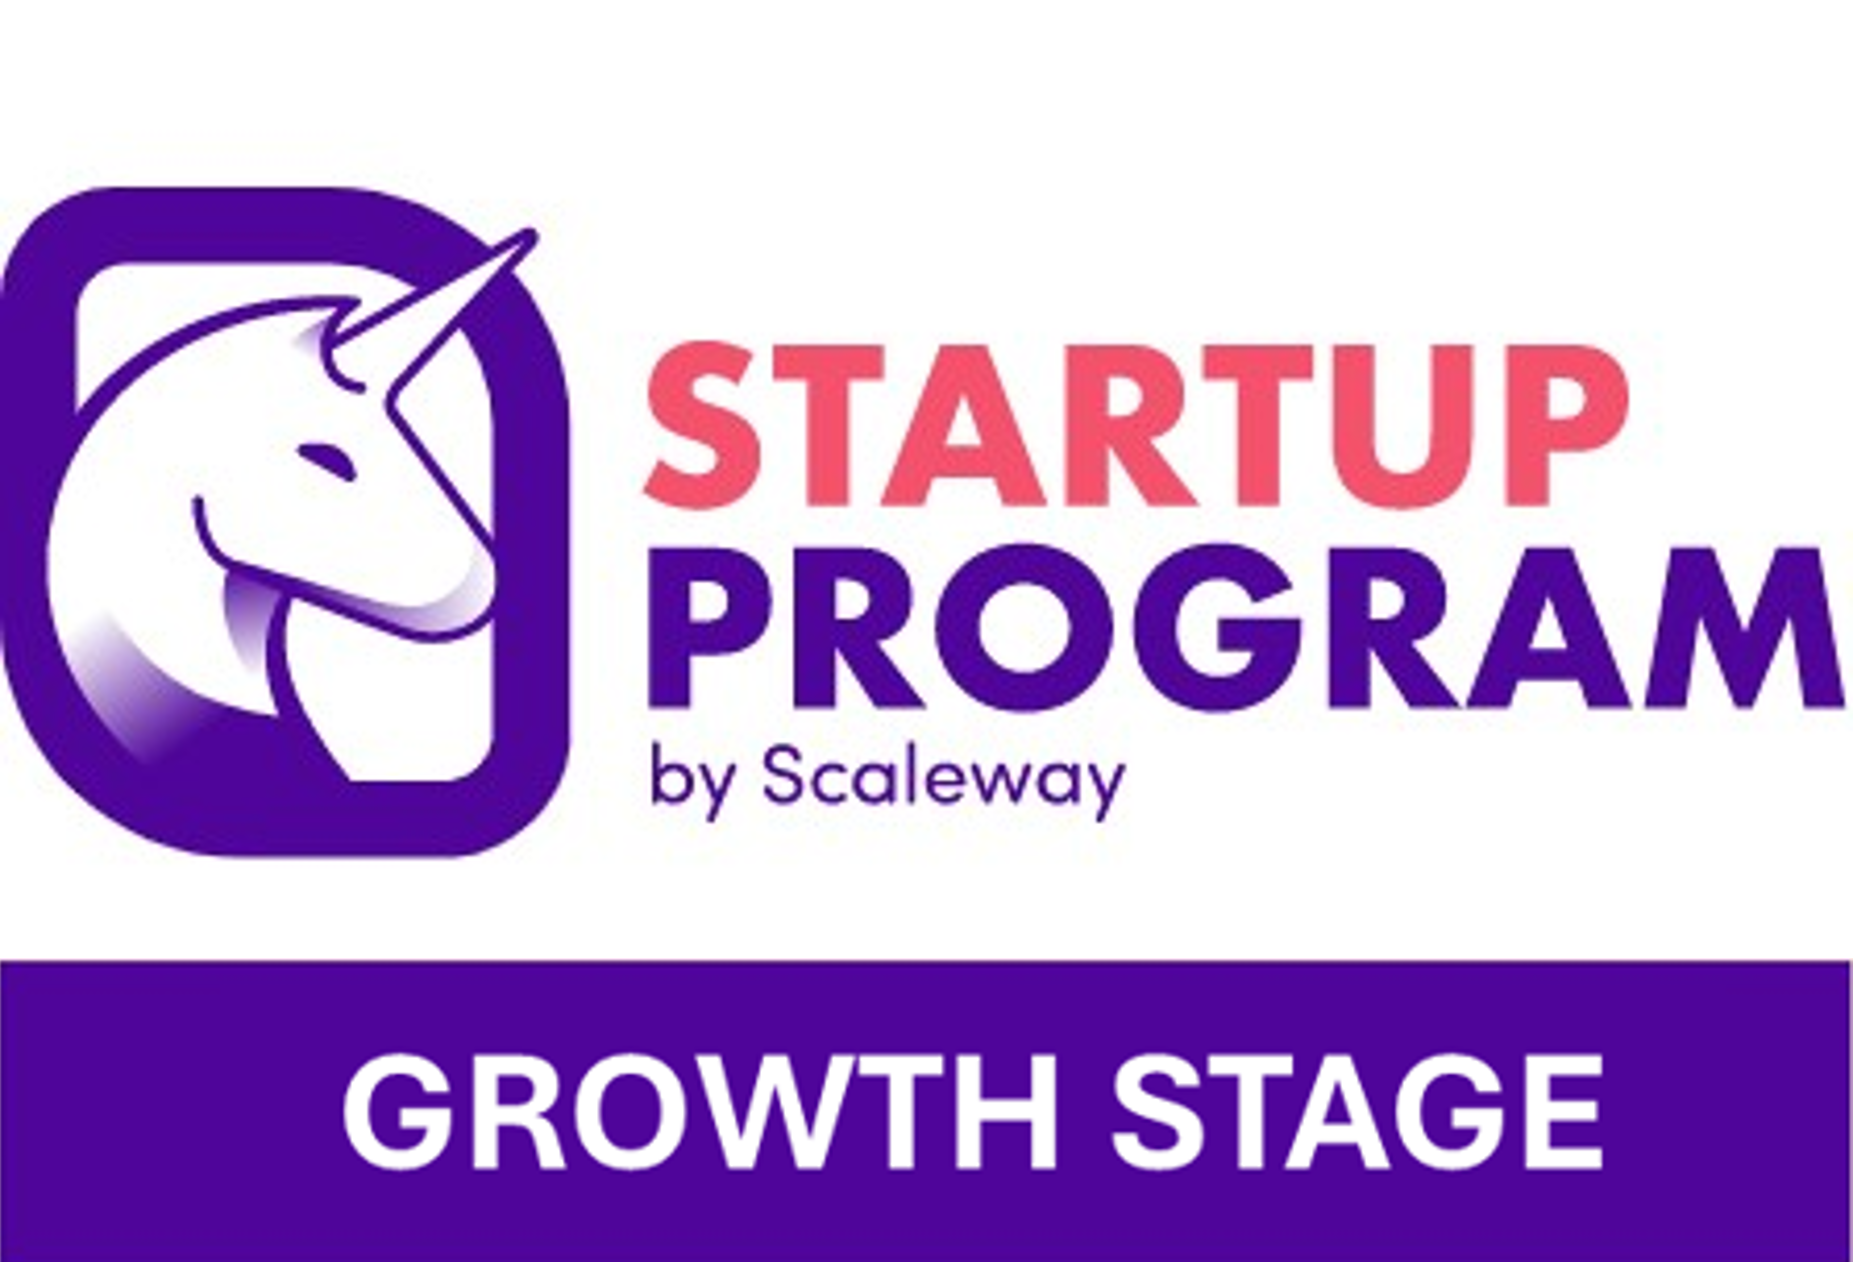 Scaleway Startup Program - Growth Stage